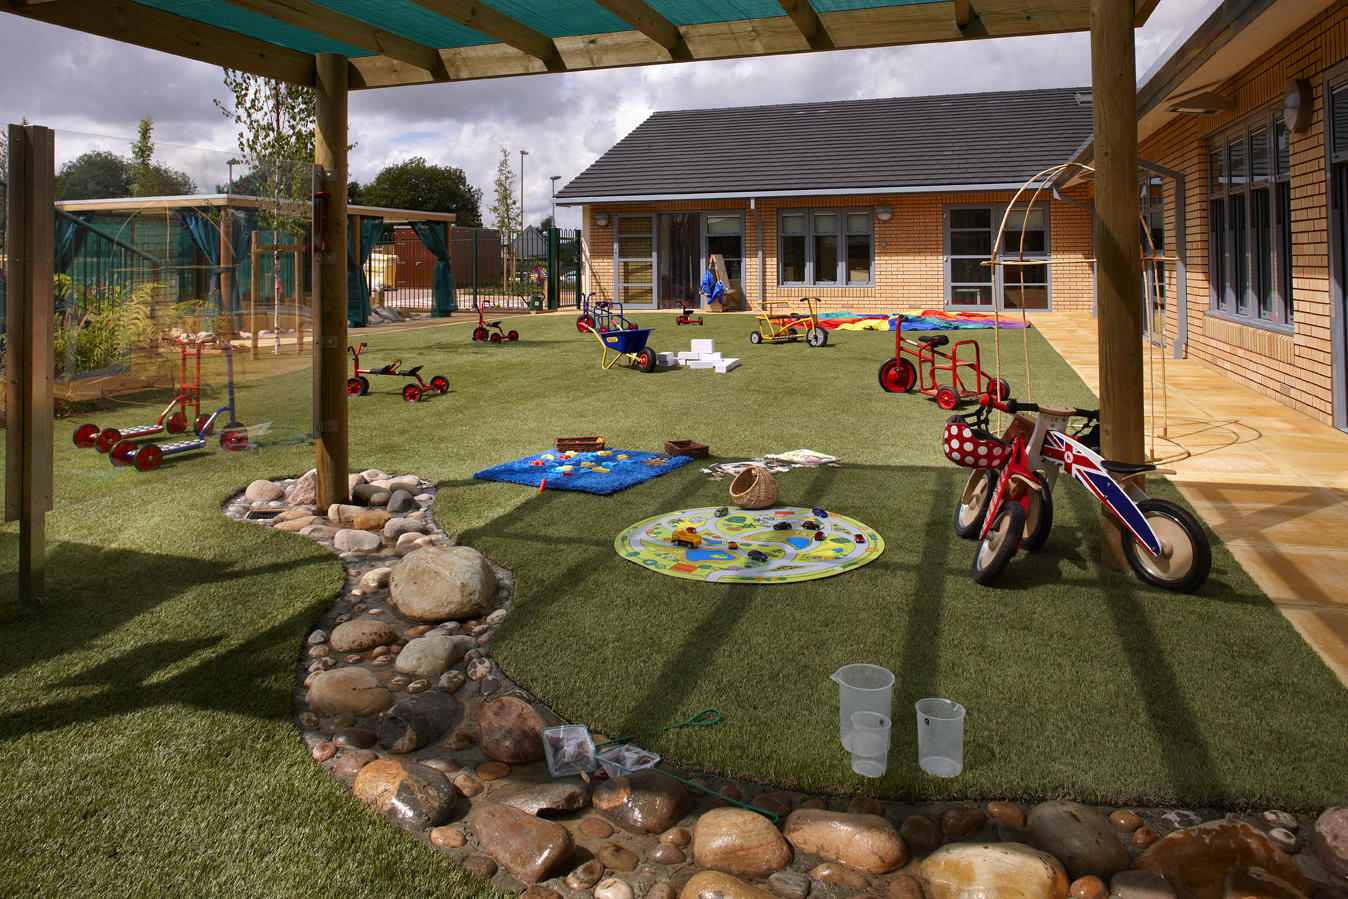 Church Crookham nursery and preschool outdoor